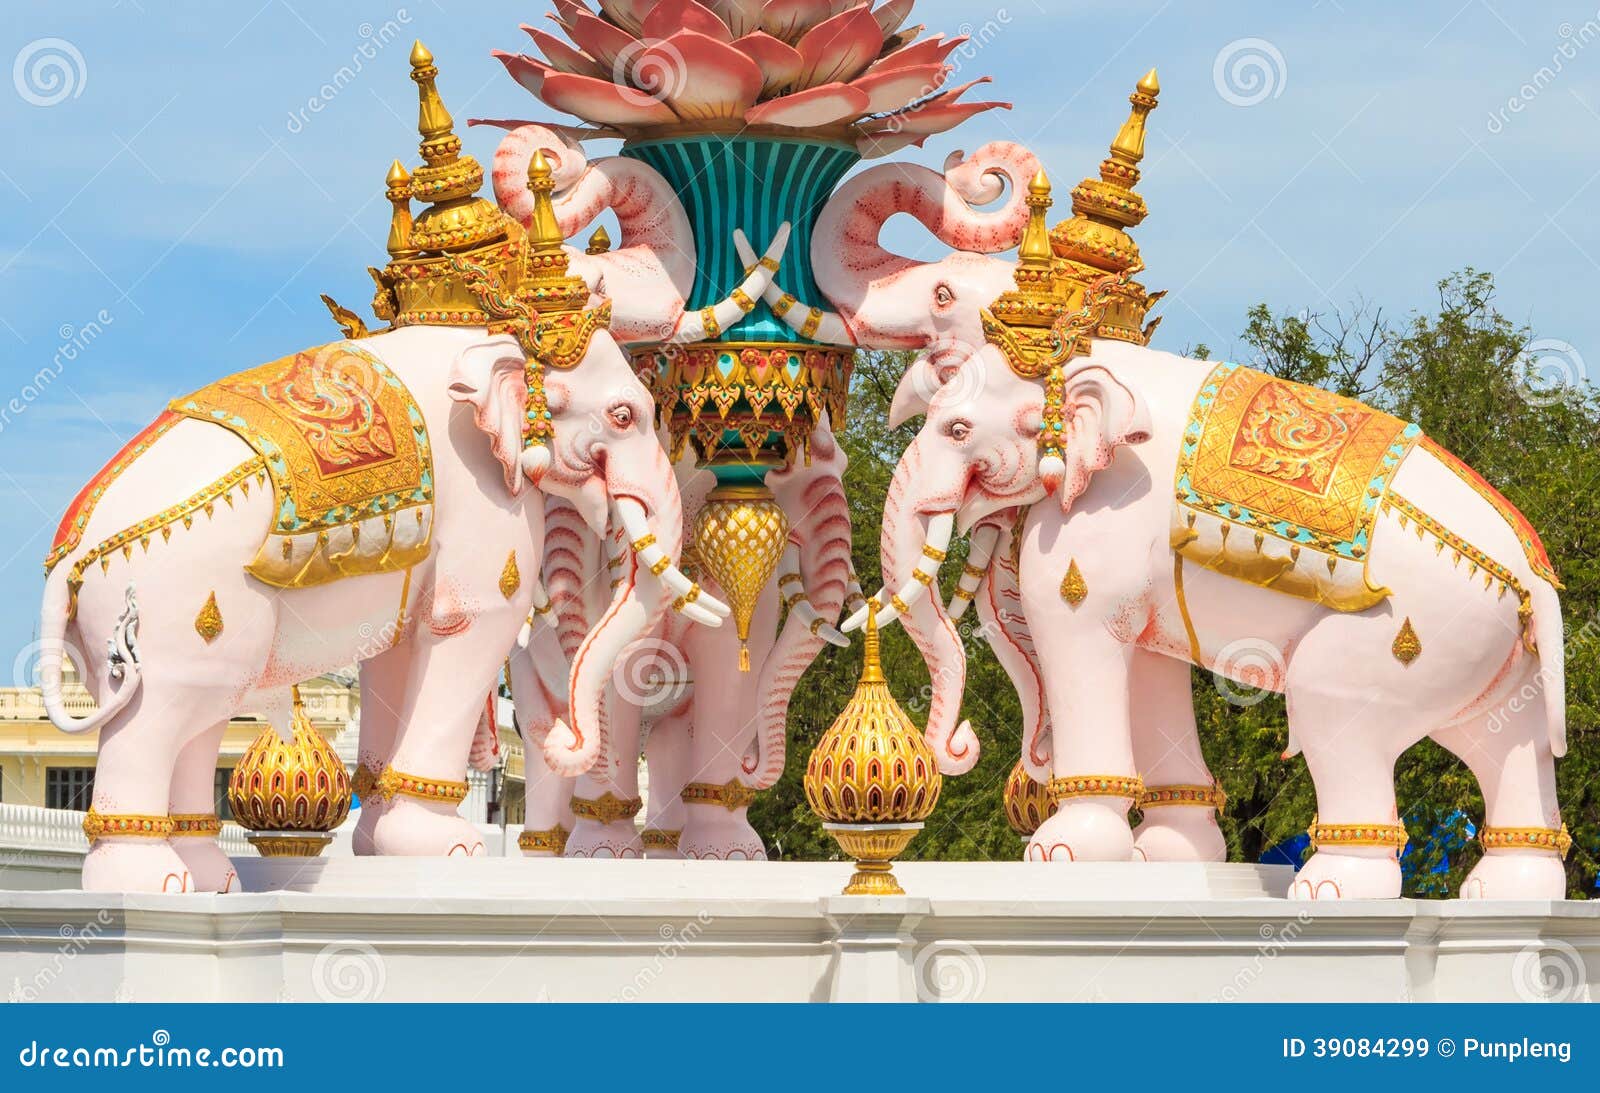 White elephant statue stock image. Image of believe - 100645271